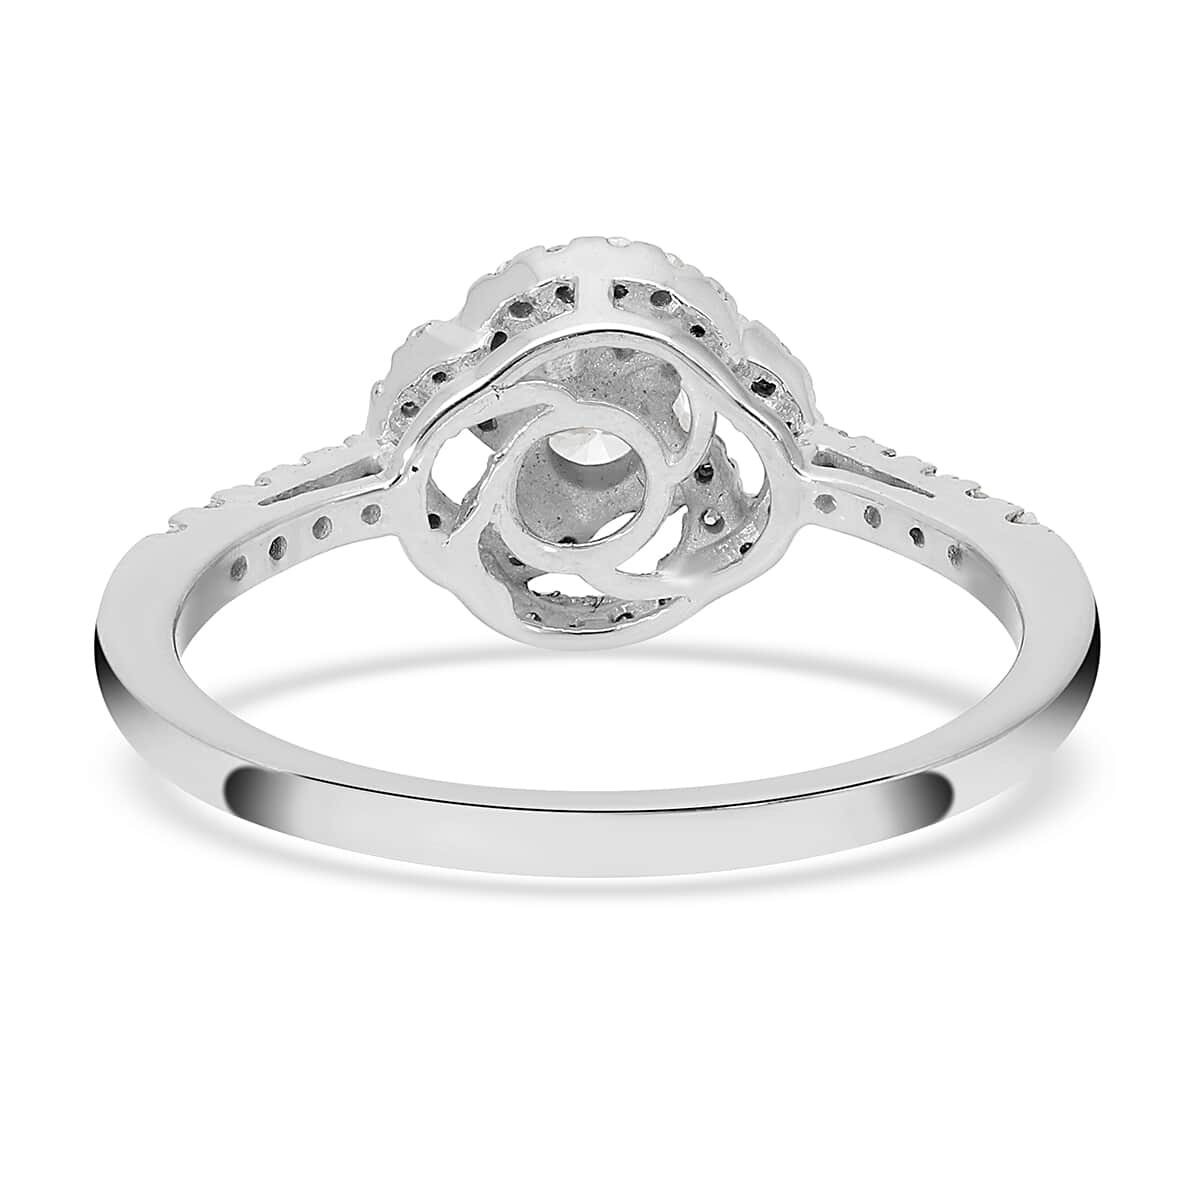 Luxoro 10K White Gold G-H I2-I3 Diamond Ring, Promise Rings (Size 9.0) 0.50 ctw image number 4